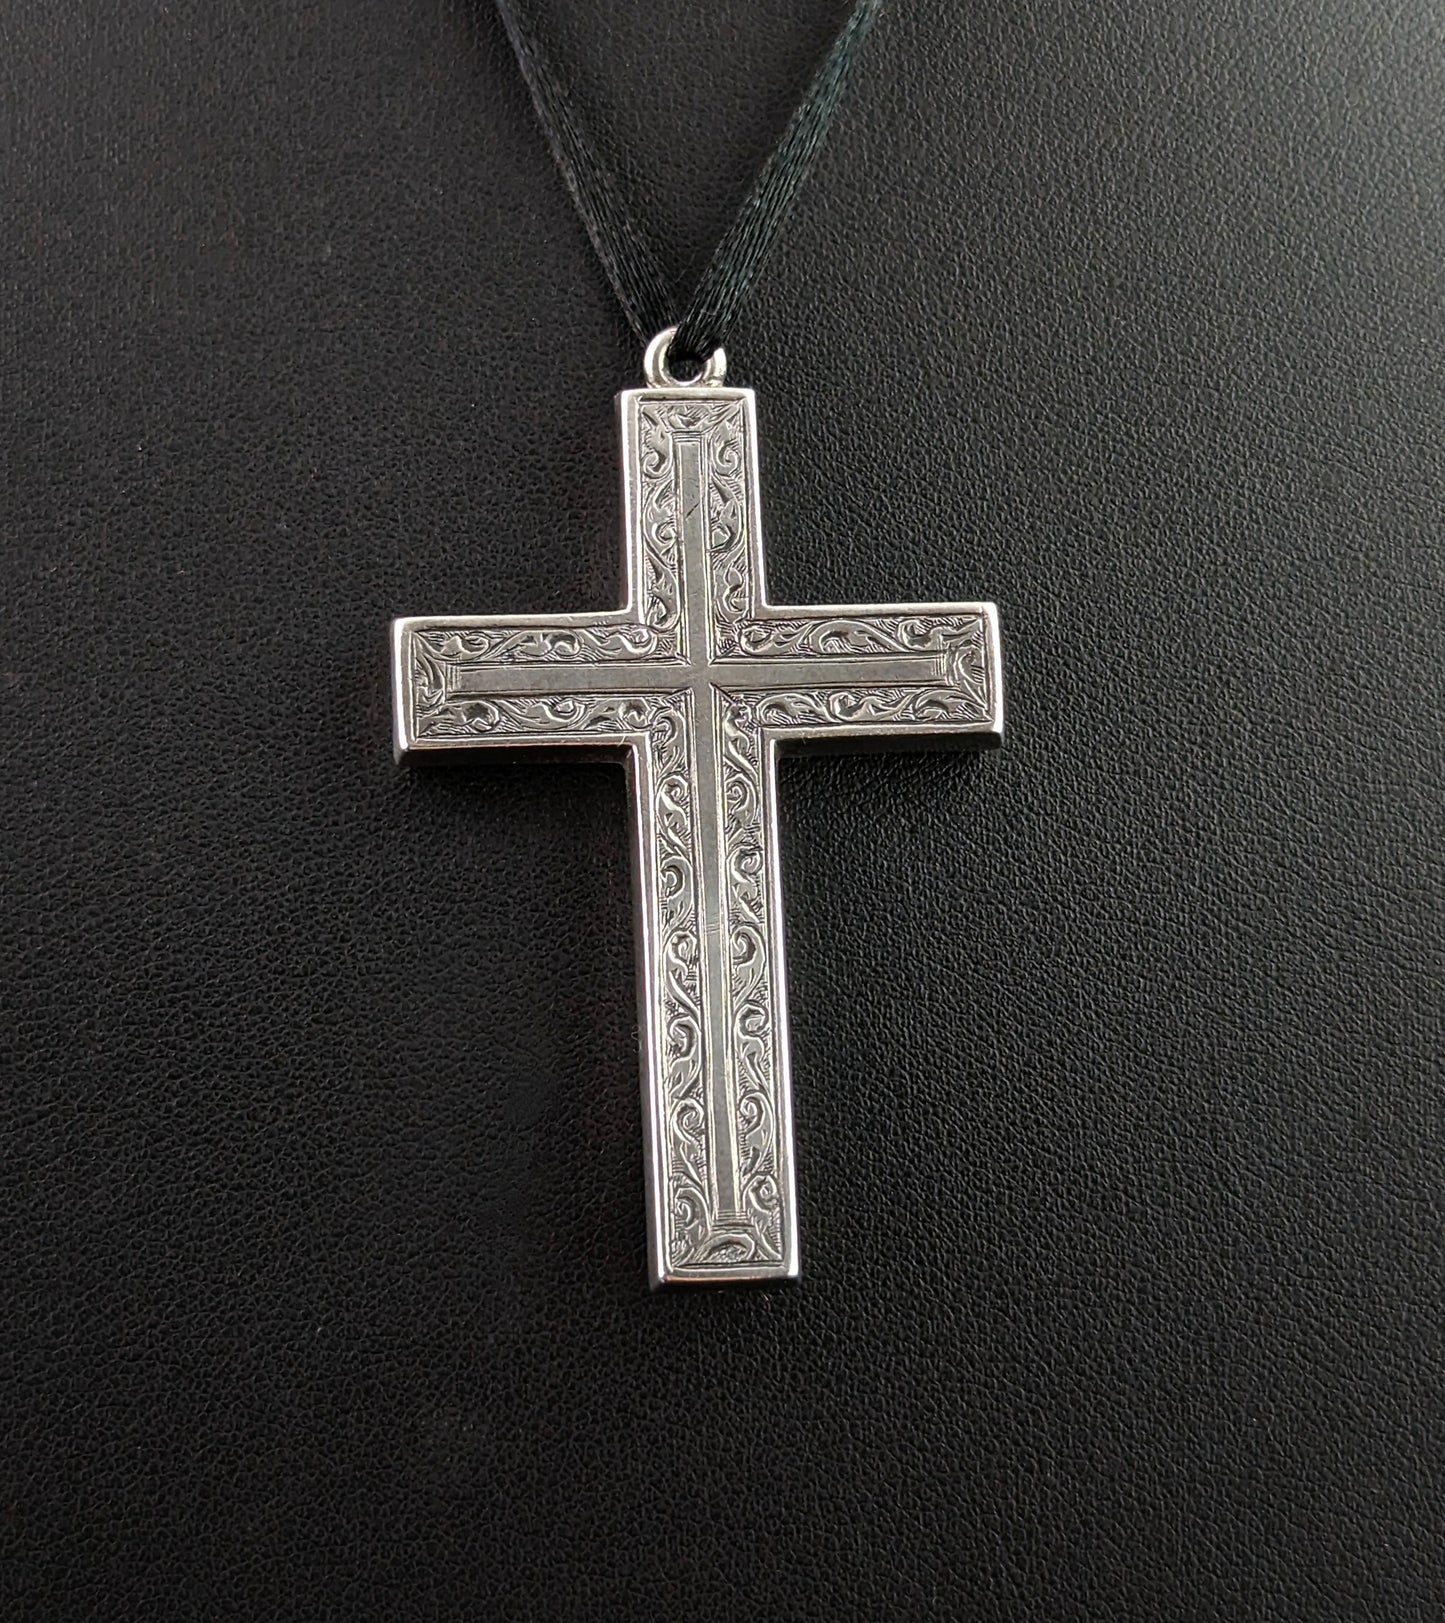 Antique silver cross pendant, large, engraved